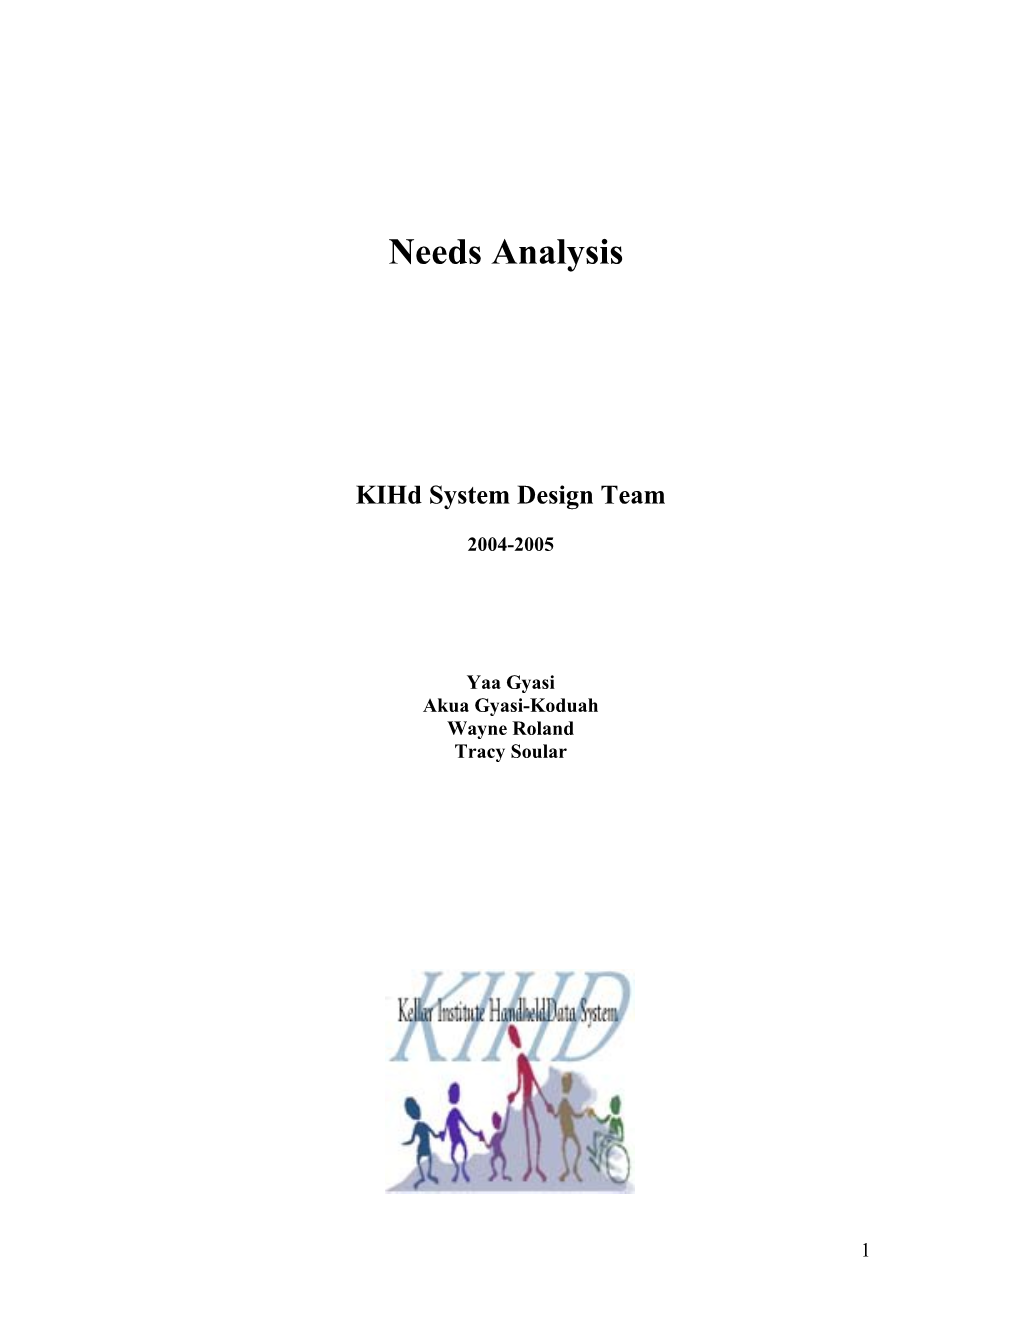 Kihd System Design Team